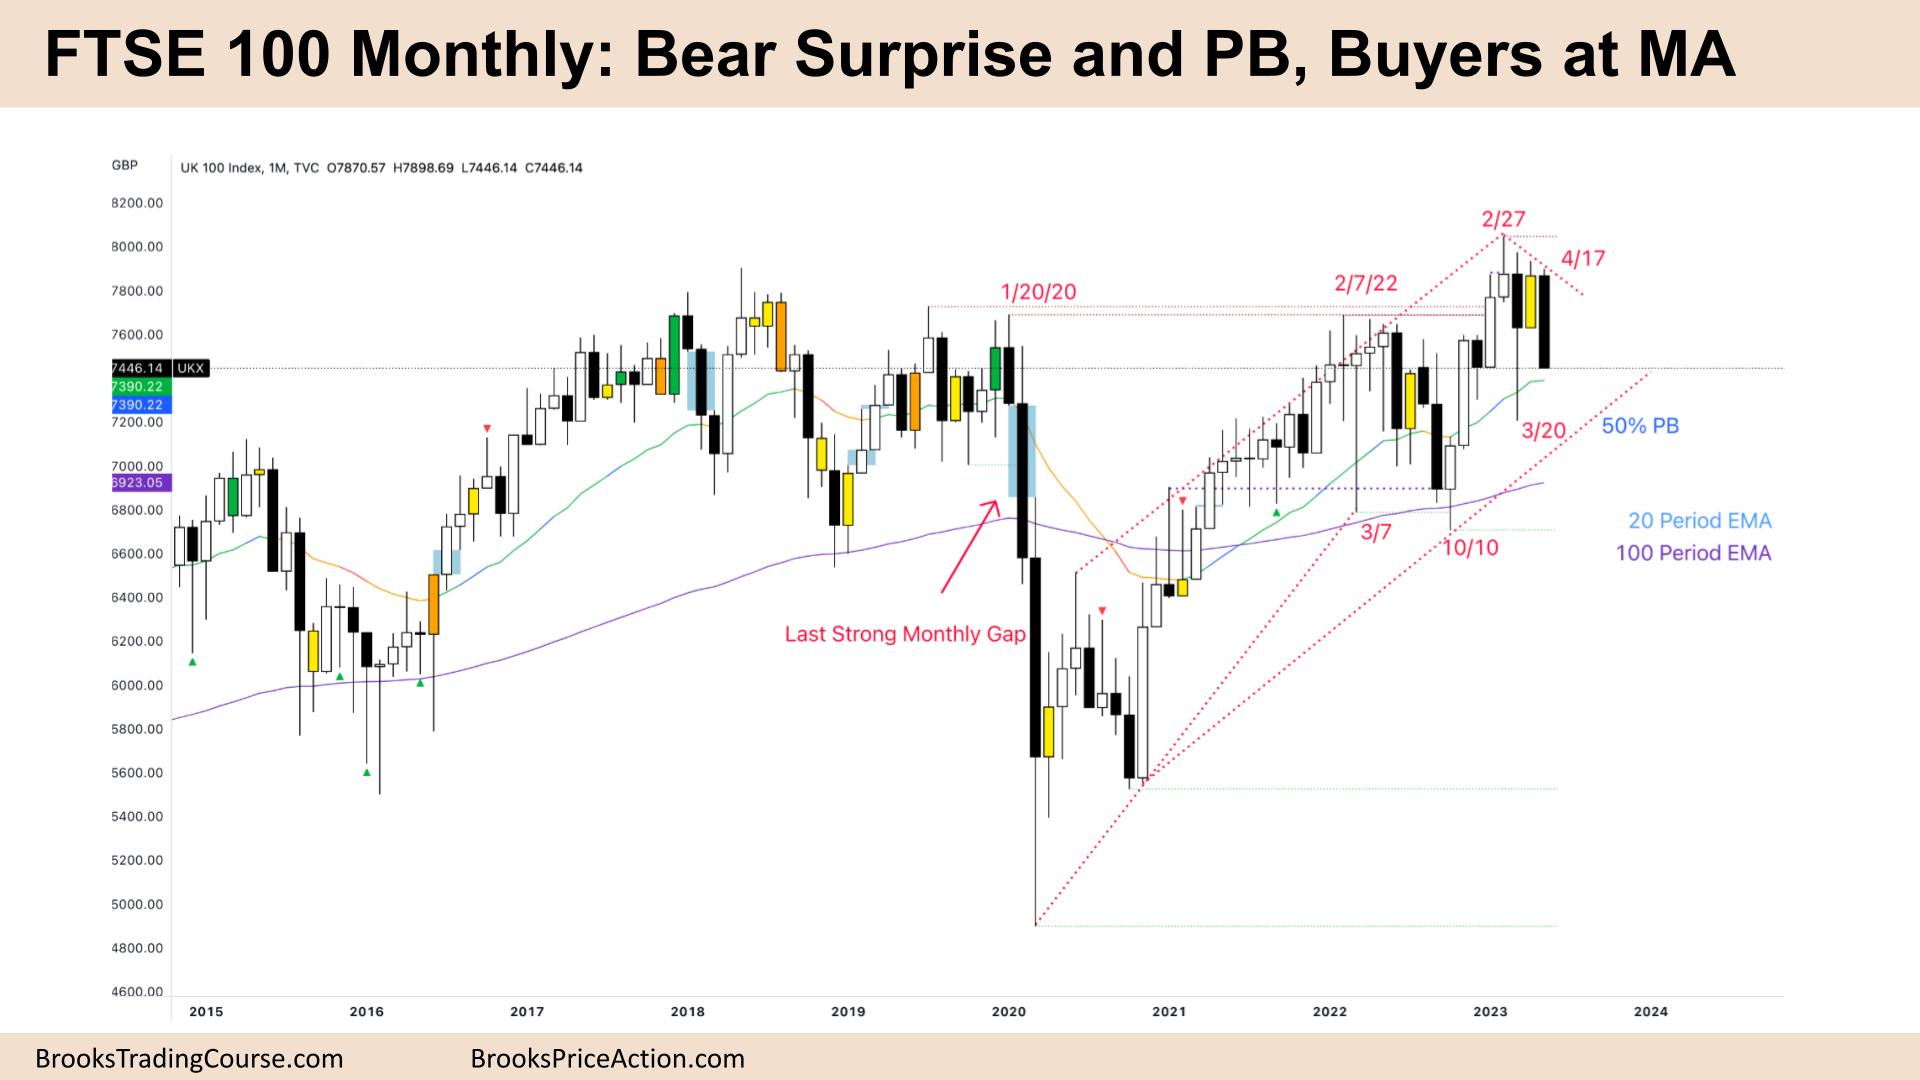 FTSE 100 Bear Surprise Pullback, Buyers at MA